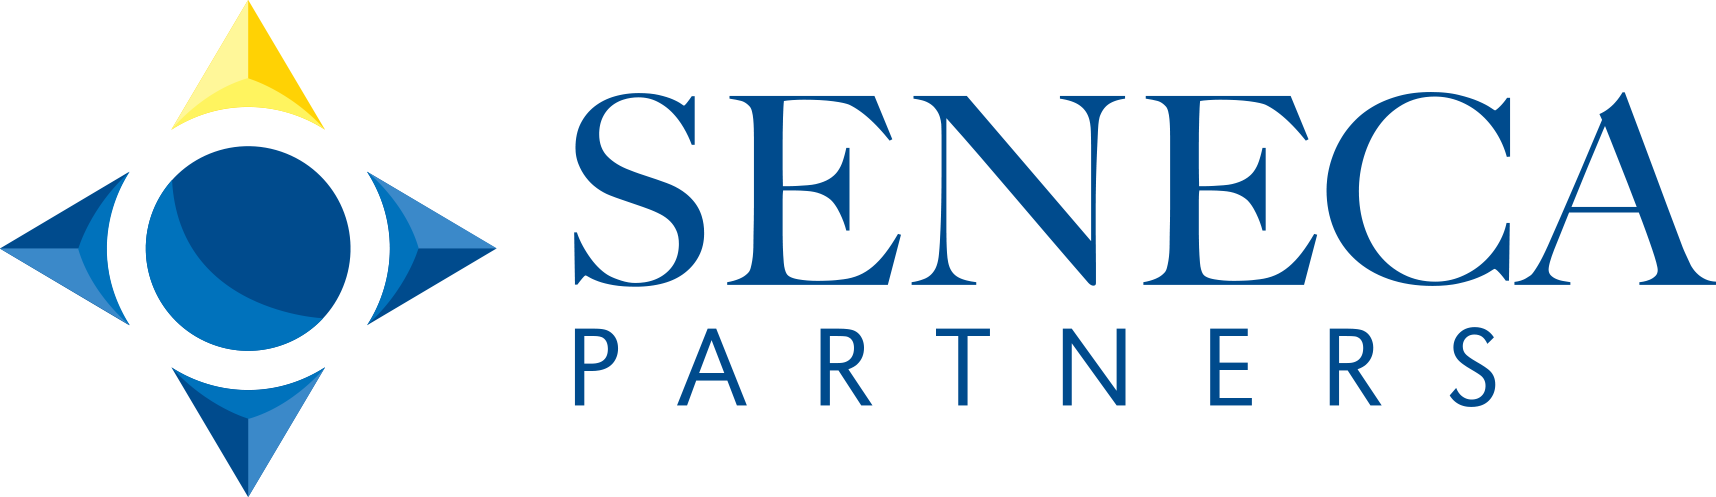 About Us – Seneca Partners